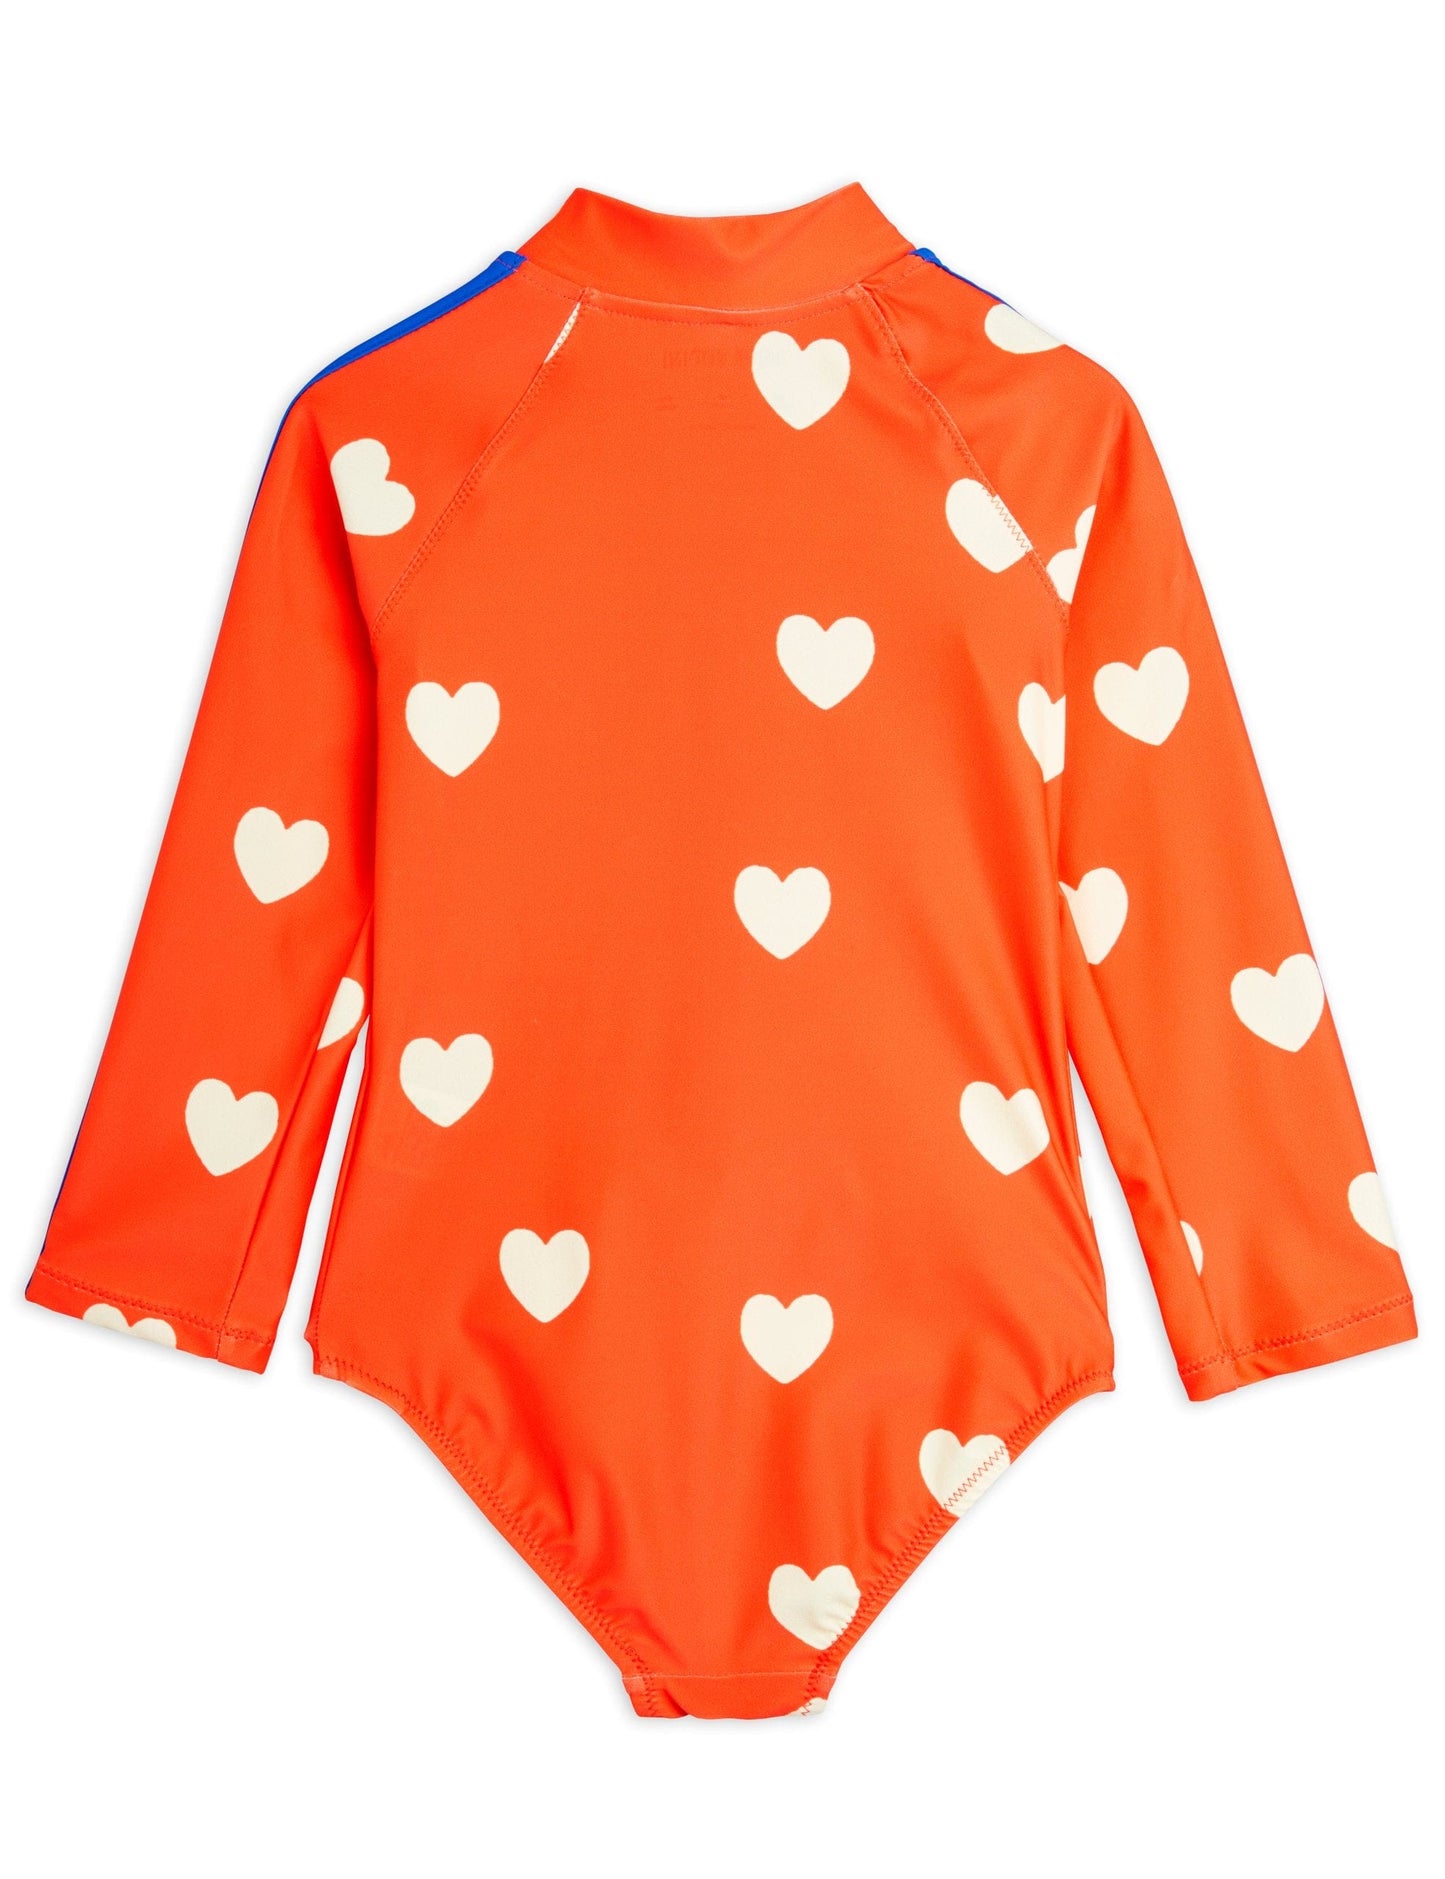 Hearts Long Sleeve UV Swimsuit